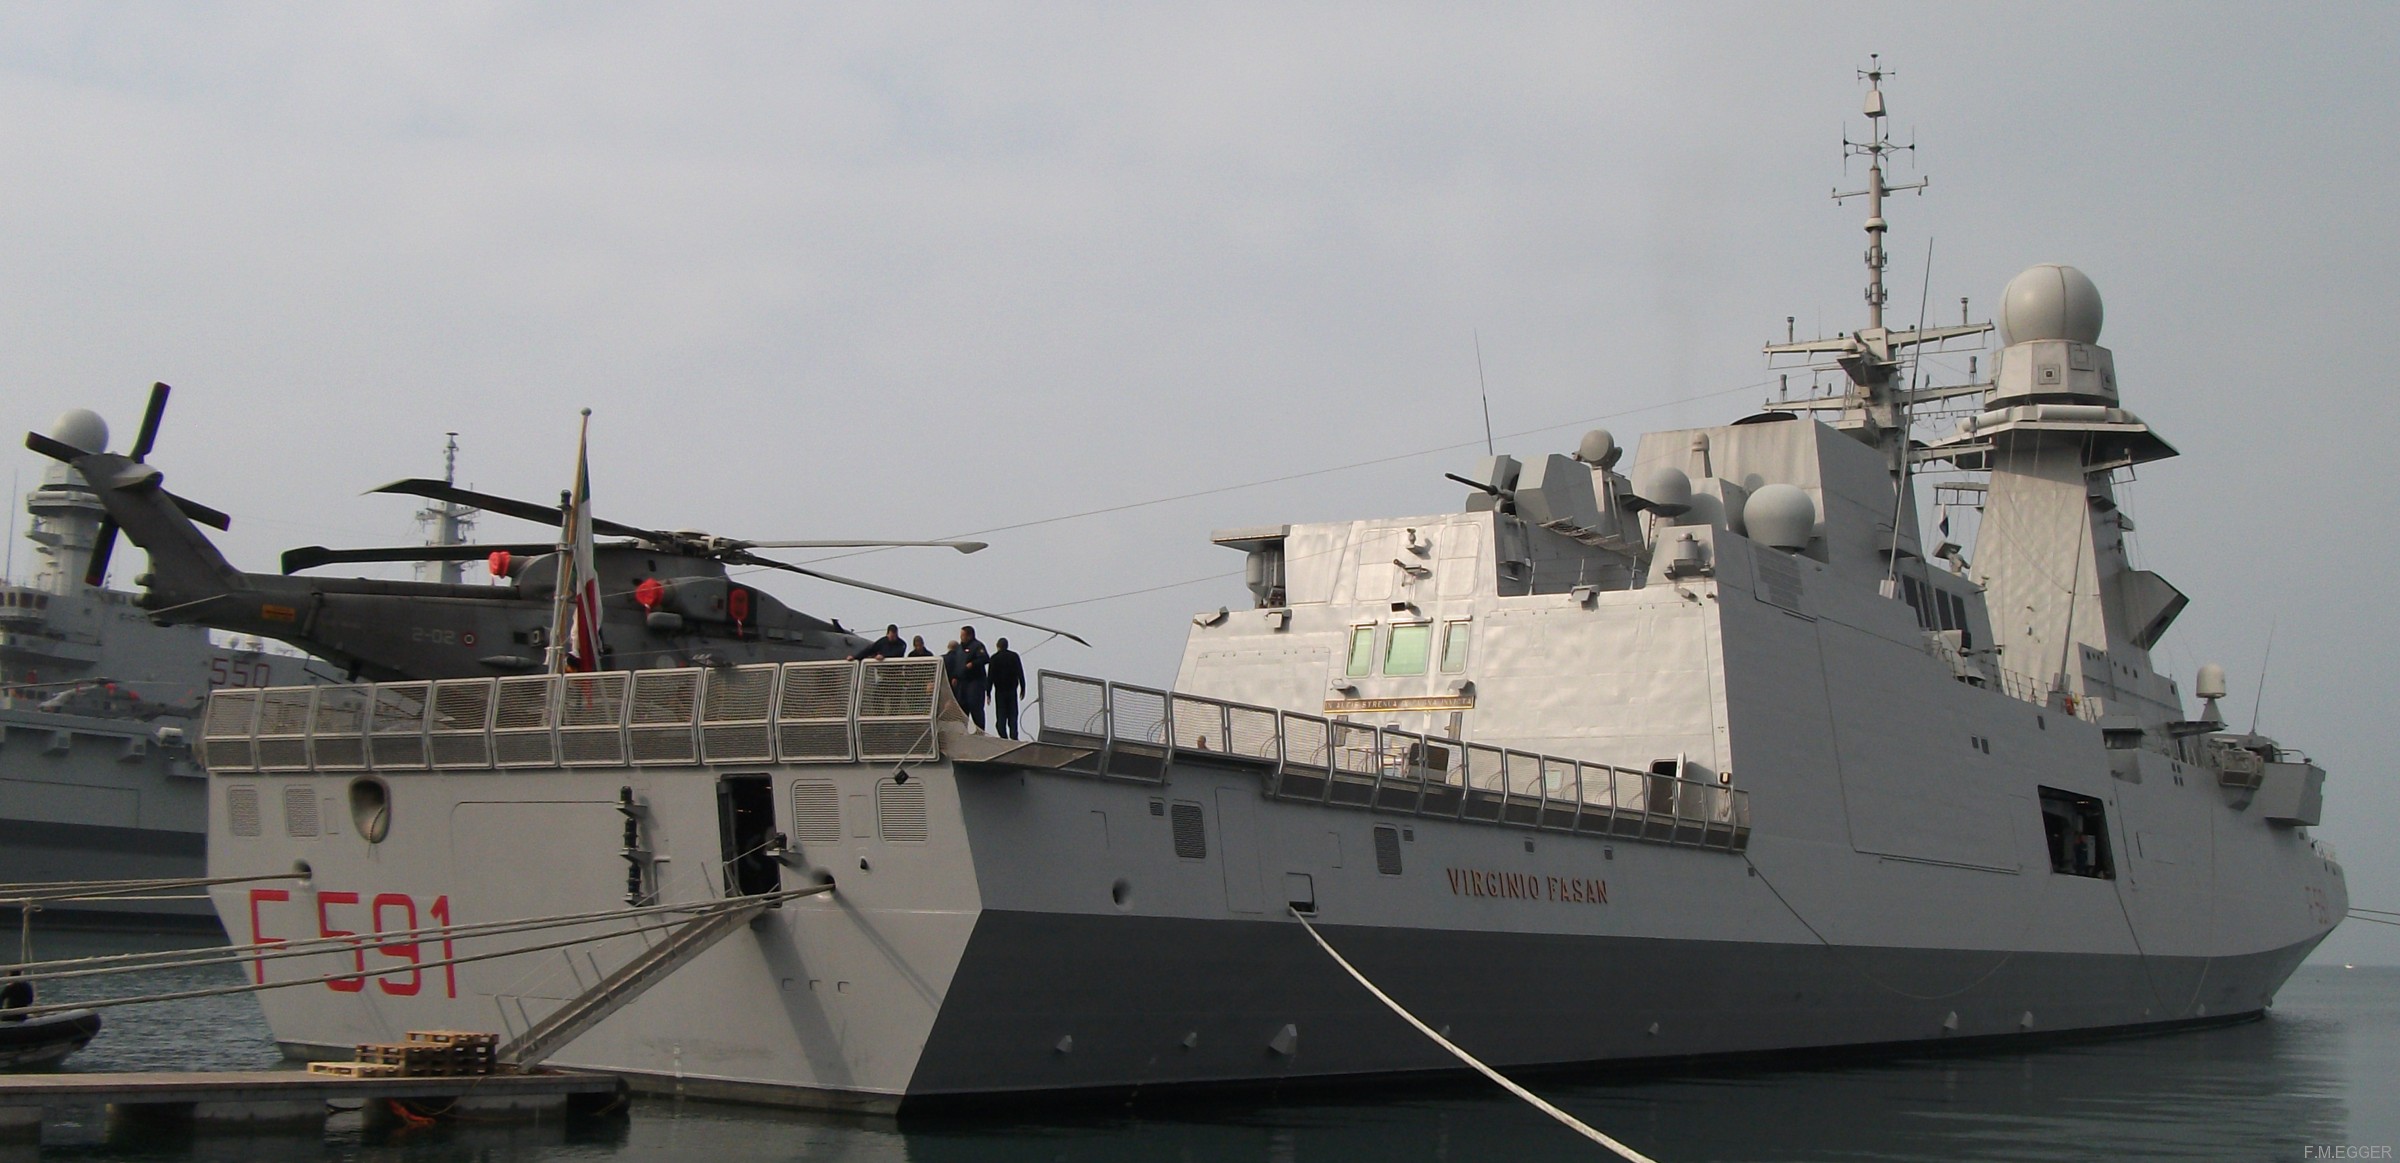 f-591 virginio fasan fremm bergamini class frigate italian navy marine militare 15